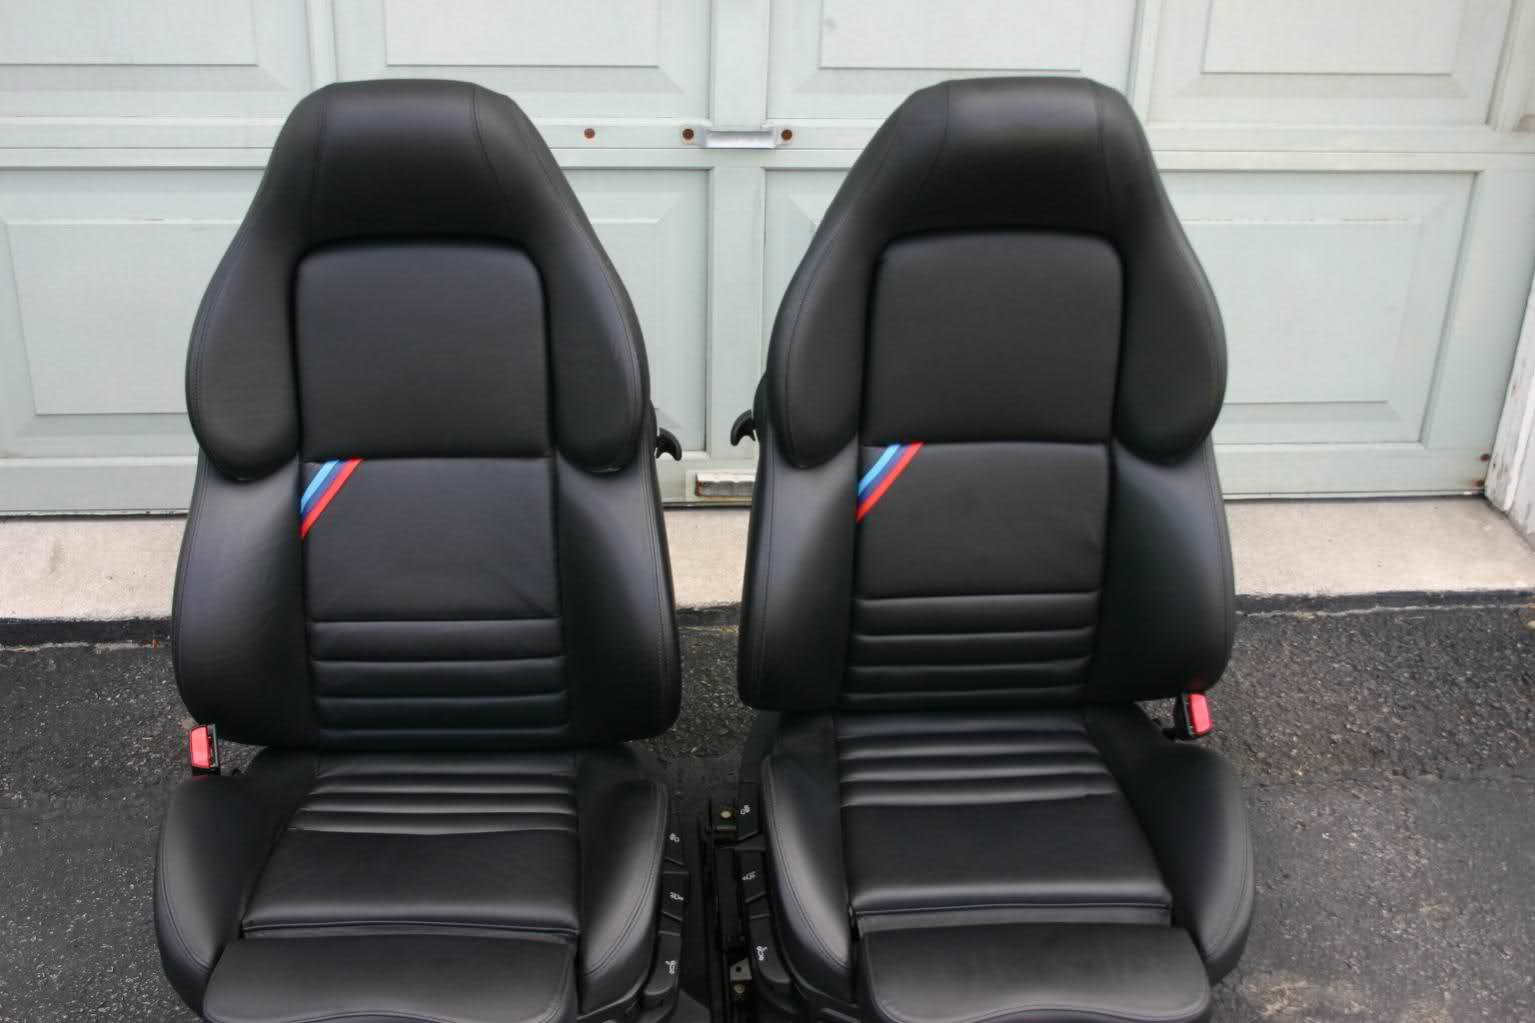 BMW or 350Z seat swap? CorvetteForum Chevrolet Corvette Forum